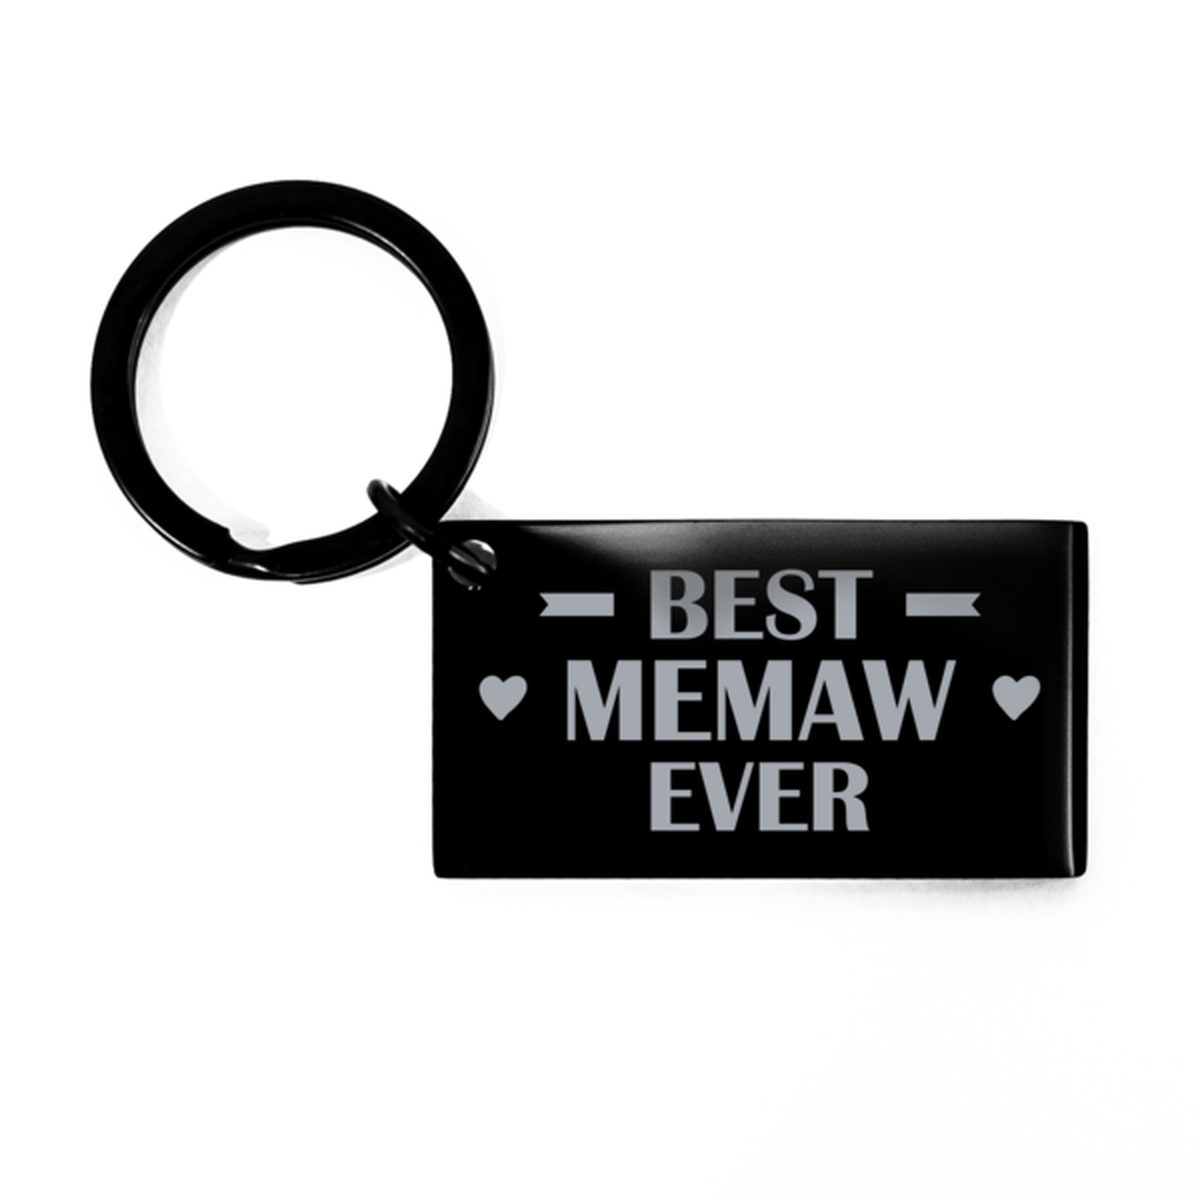 Best Memaw Ever Memaw Gifts, Funny Black Keychain For Memaw, Birthday Engraved Keyring Presents For Women